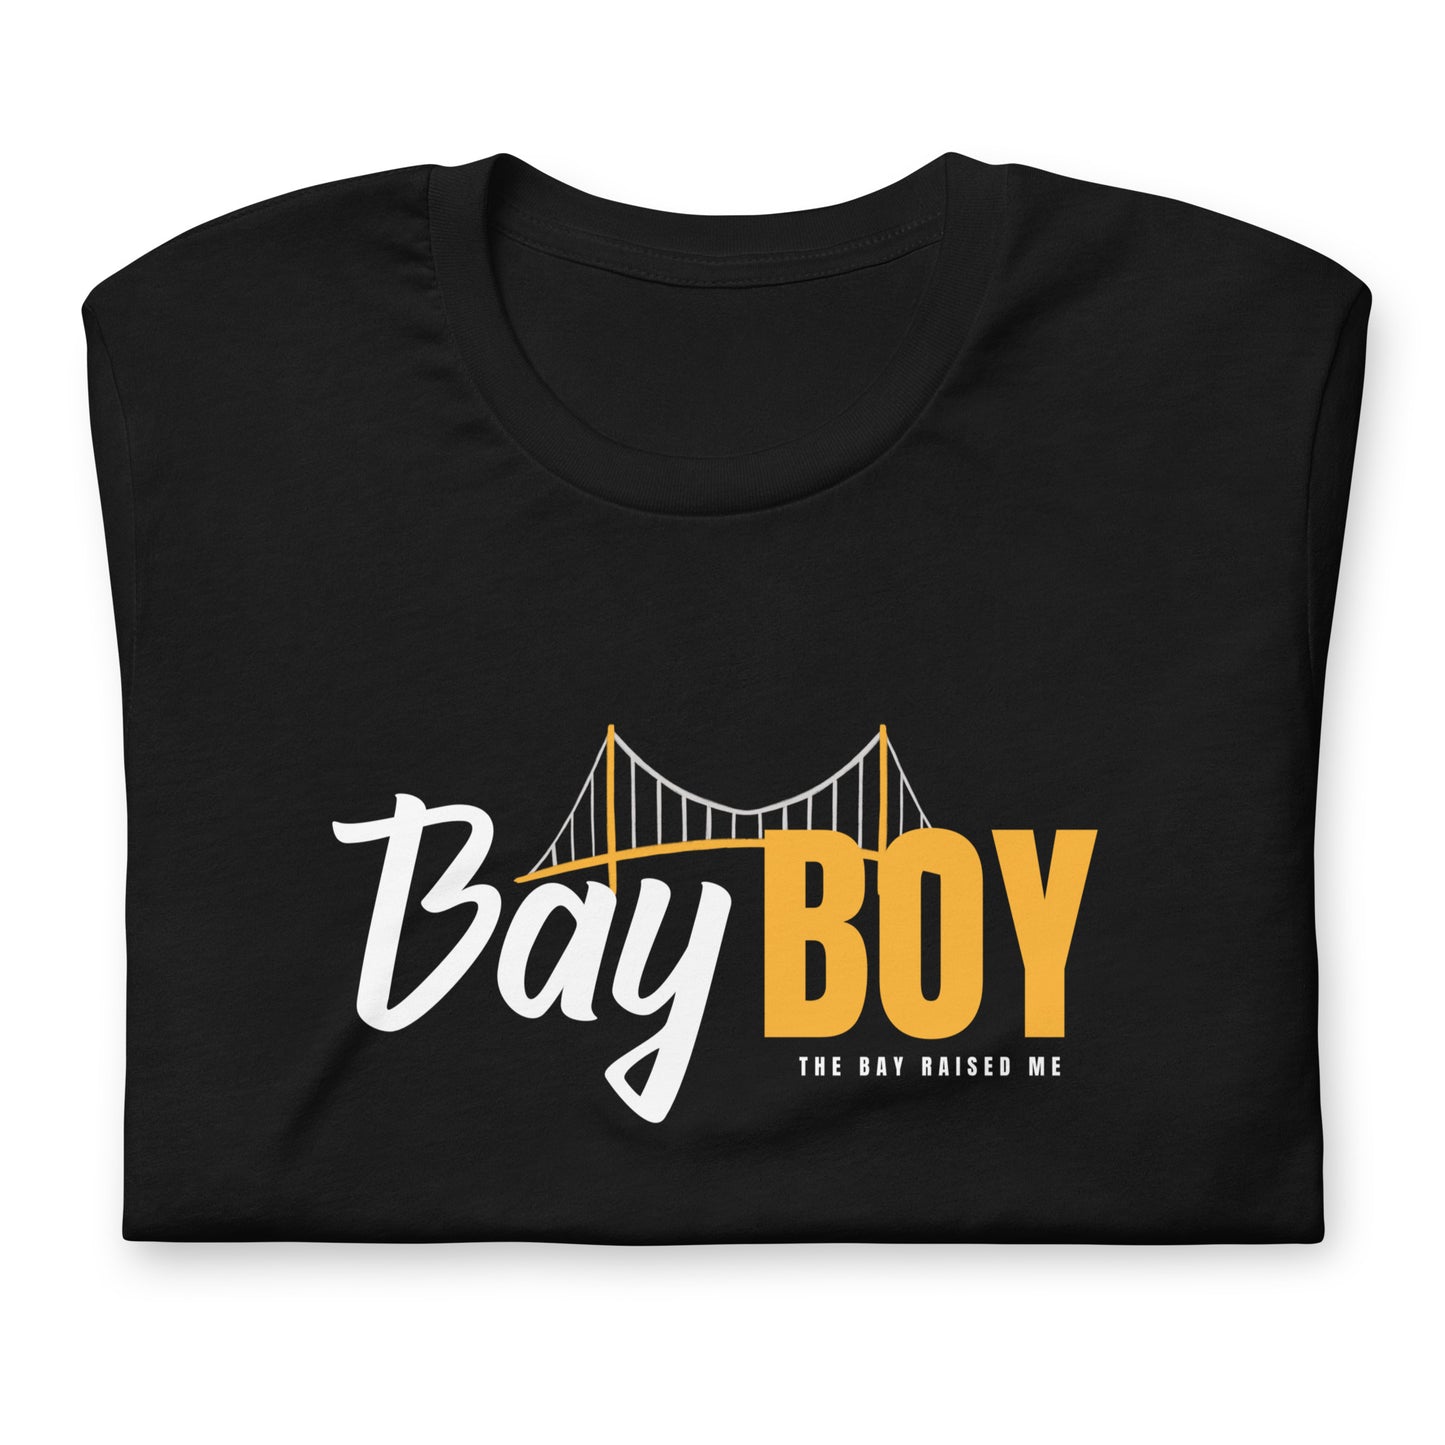 Bay BOY Unisex T-Shirt